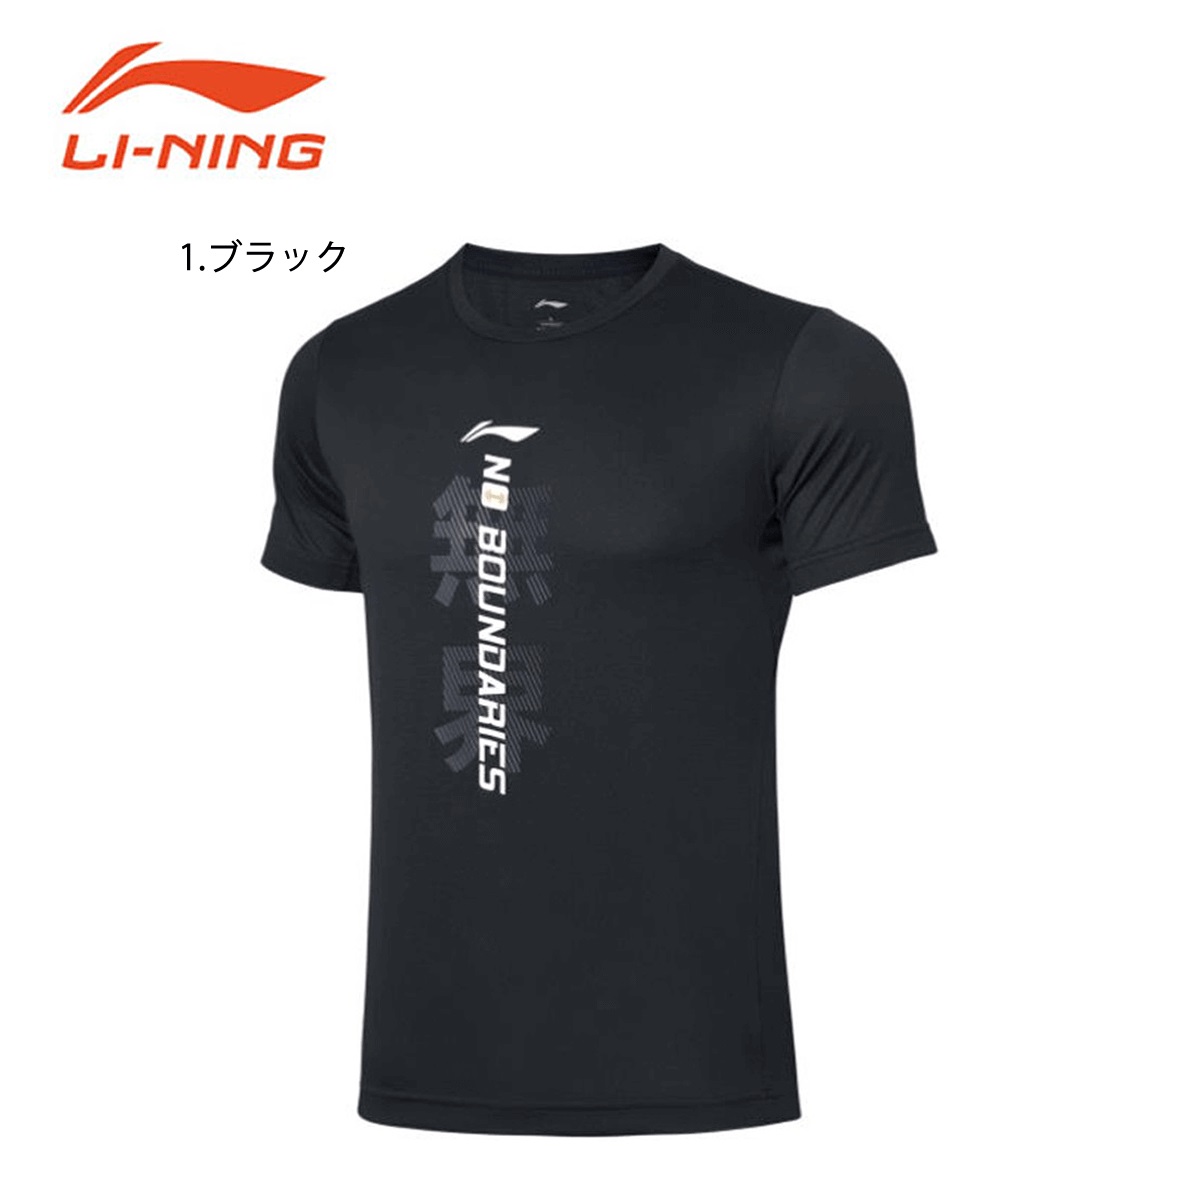 LI-NING AHSM221 DWADE Tシャツ(ユニ メンズ) バスケットボール ウェア リーニン